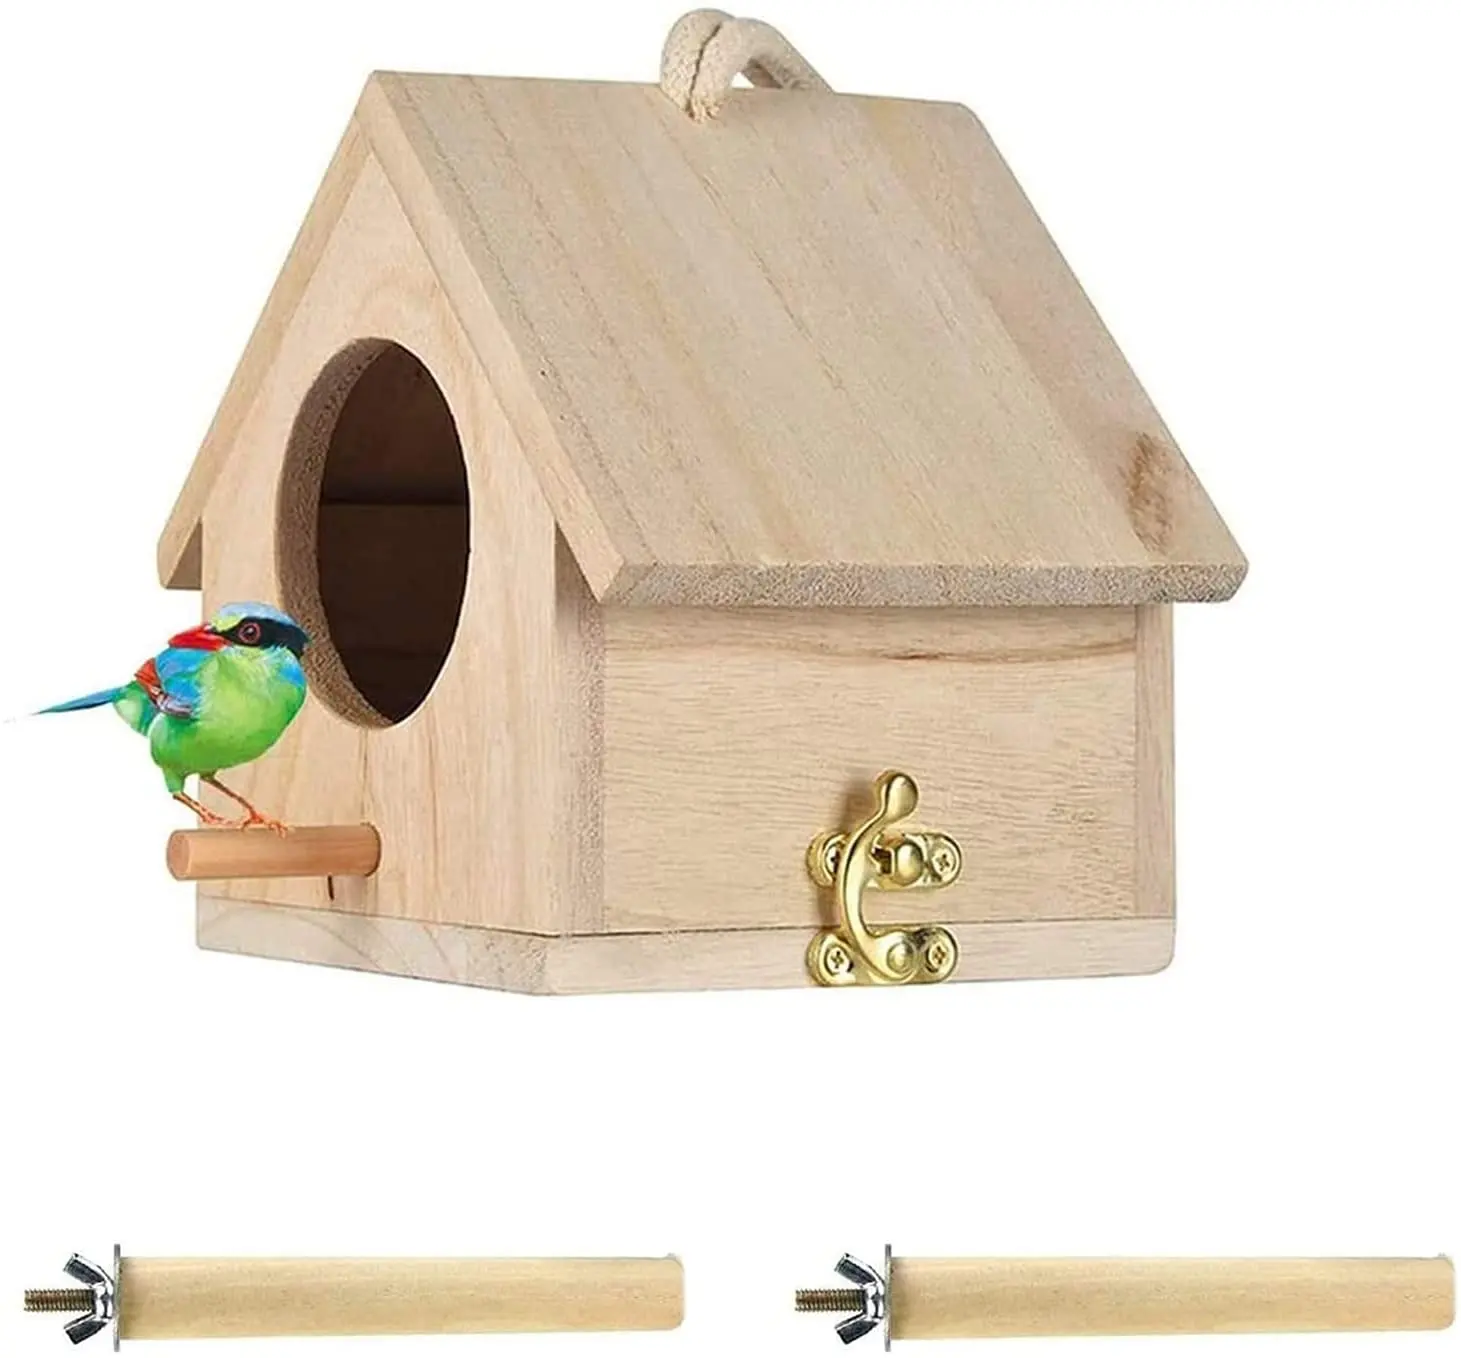 Habitat in legno per casetta per uccelli in piedi casa per uccelli appesa al di fuori degli accessori per gabbie per uccelli Habitat in legno naturale